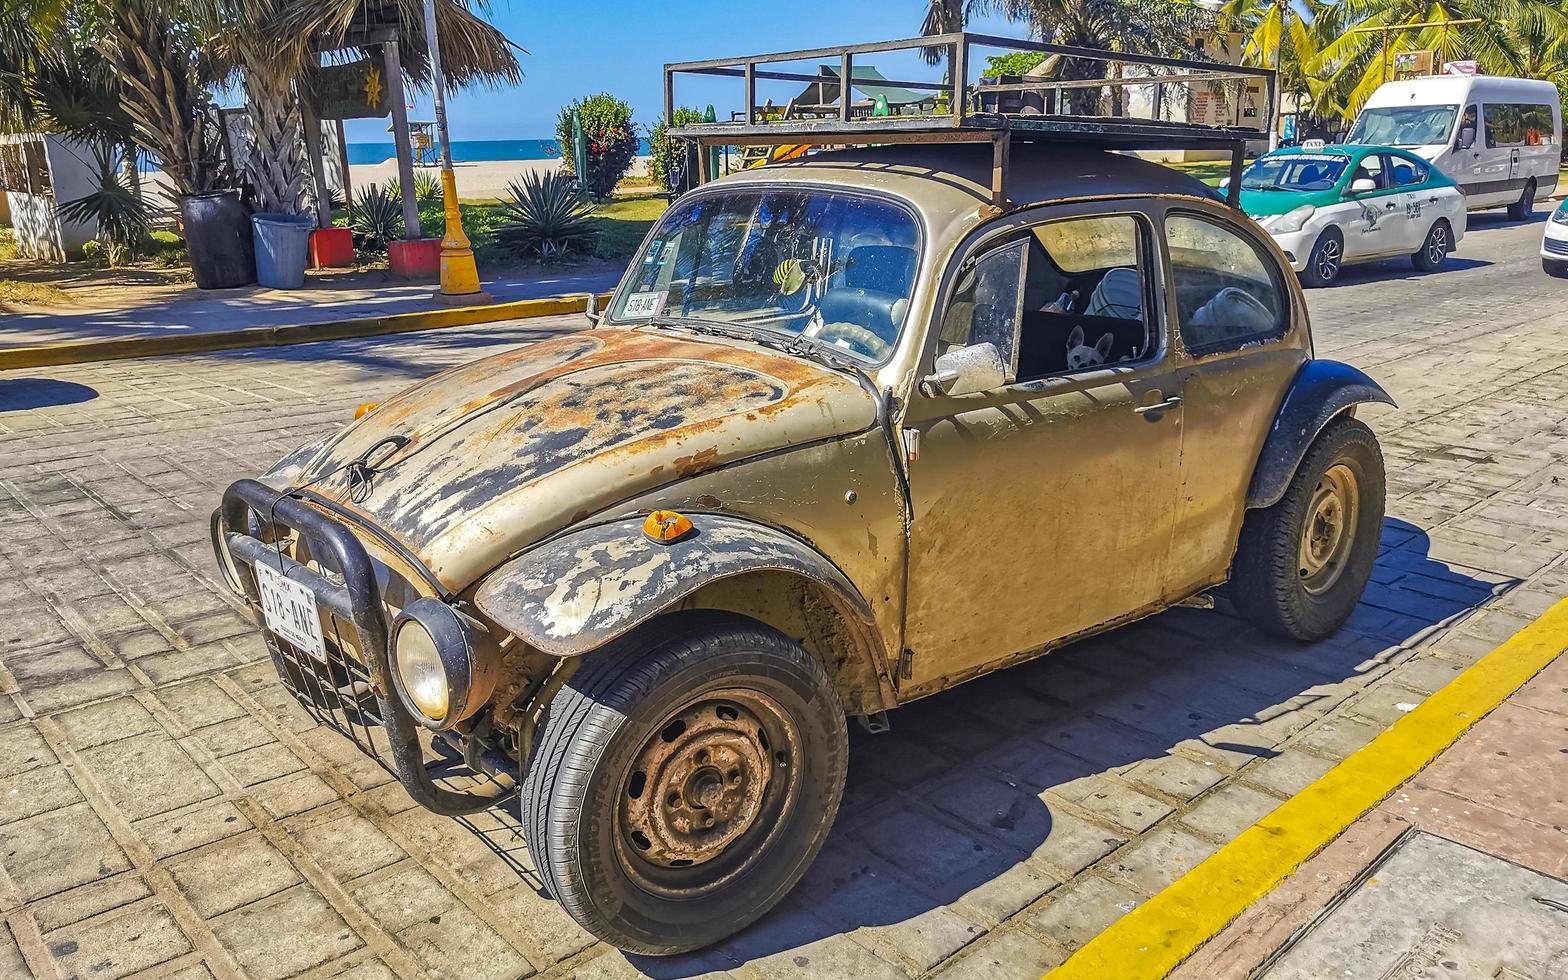 Puerto Escondido Oaxaca Mexico 2022 Old broken rusty and damaged classic vintage cars in Mexico. photo